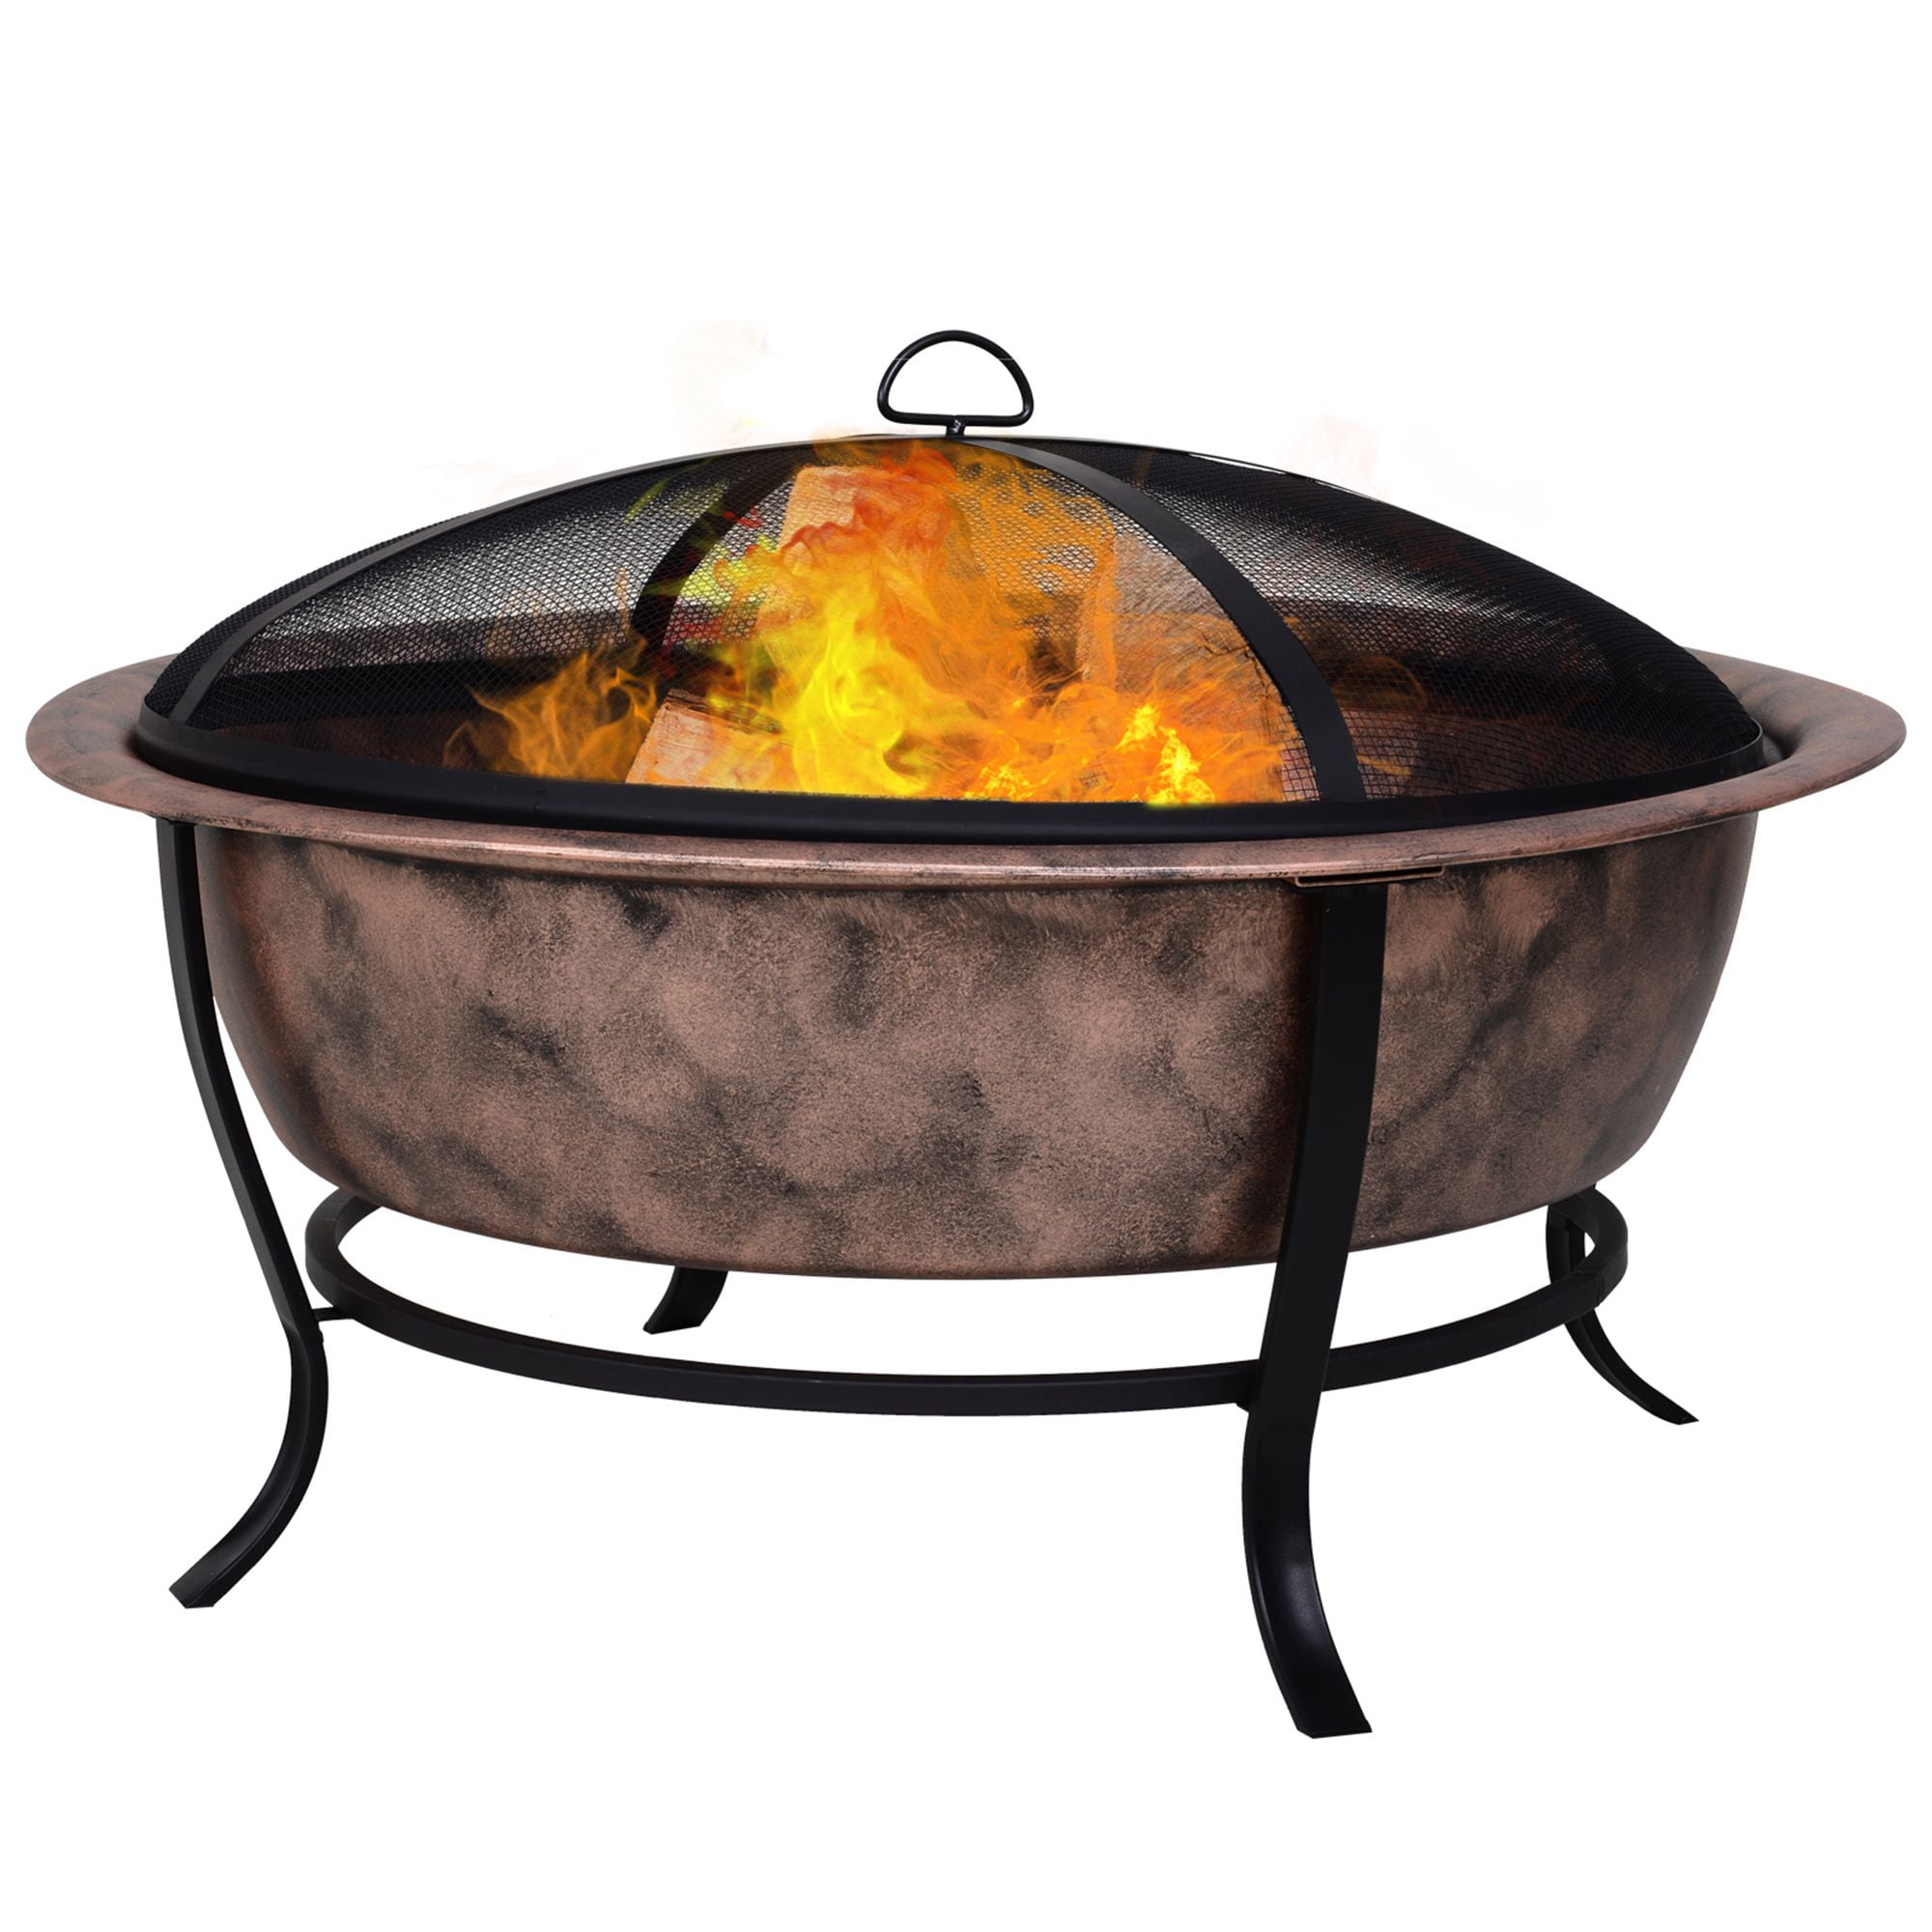 Outsunny Black Rustic Cauldron Style, Hampton Bay Fire Pit Cover